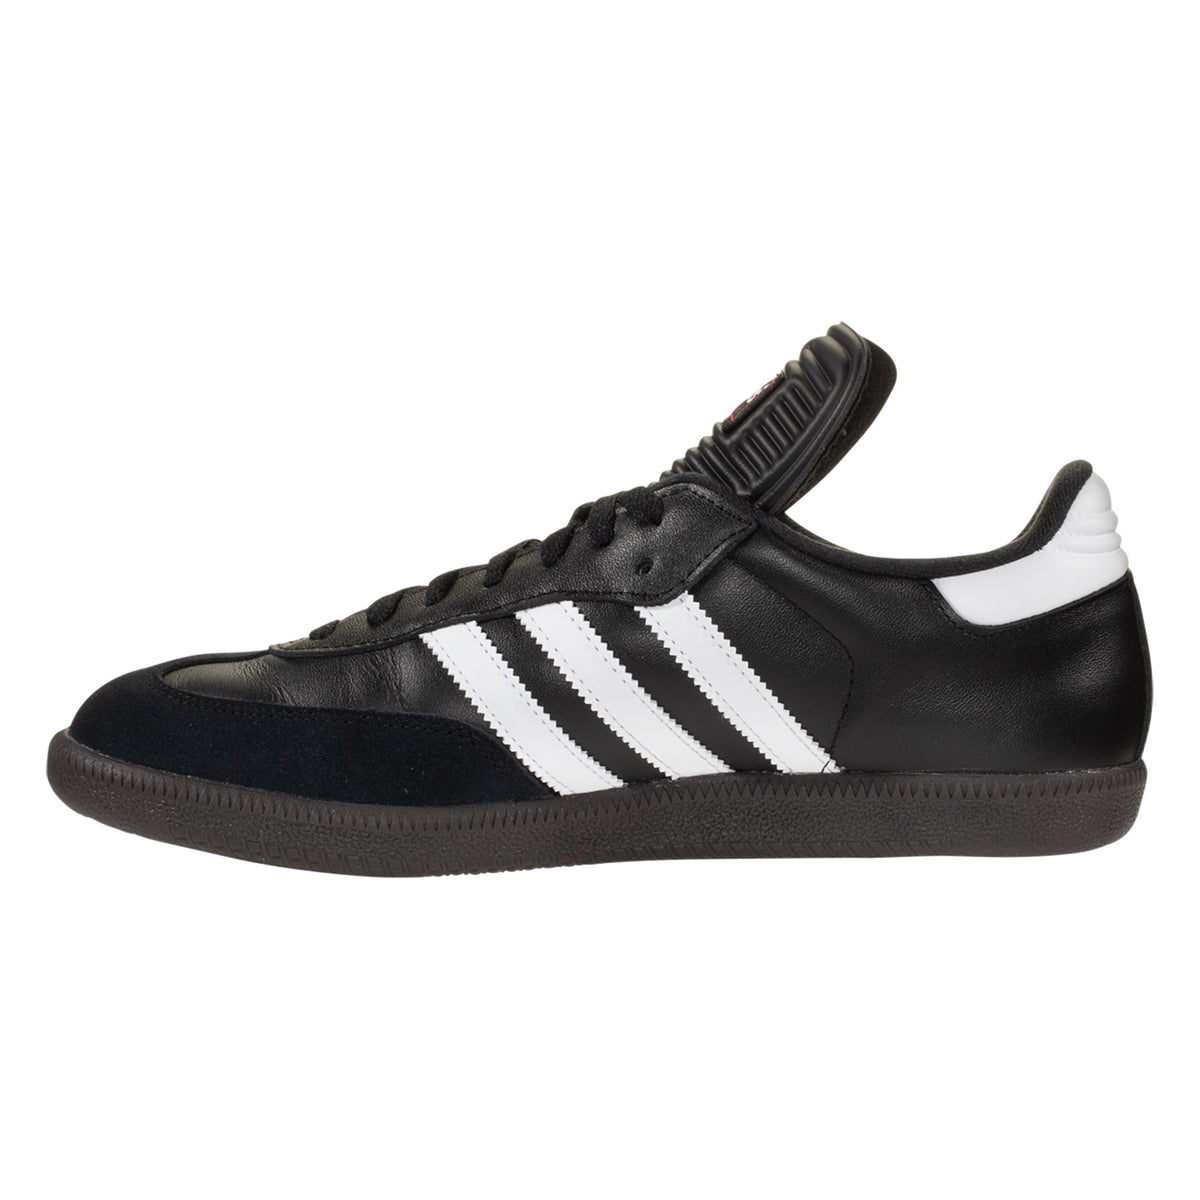 adidas Samba Classic Indoor Shoe - Black/White 034563 – Soccer USA